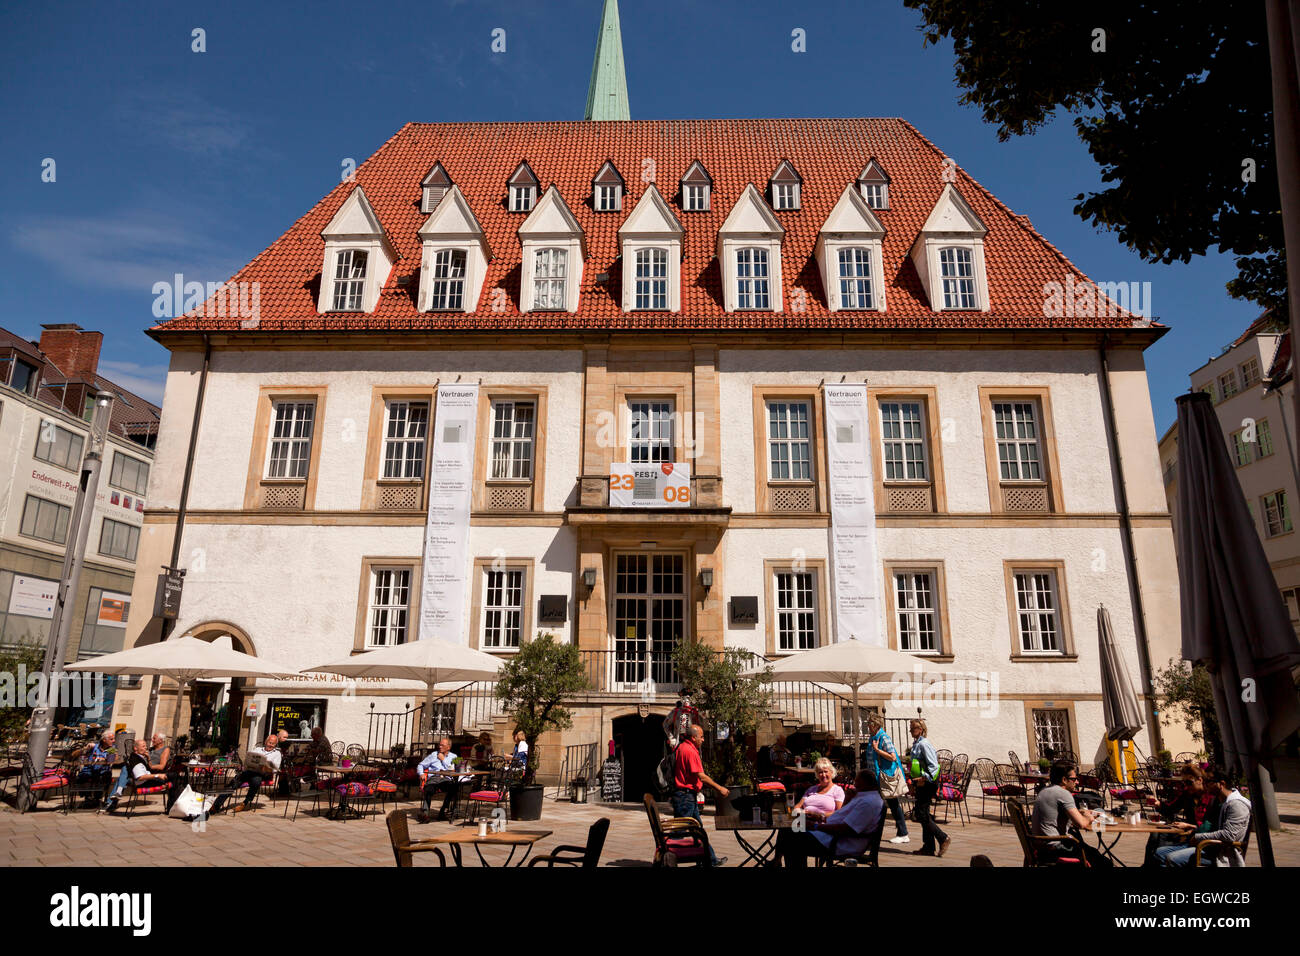 Theatre on old market square in Bielefeld, North Rhine-Westphalia, Germany, Europe Stock Photo